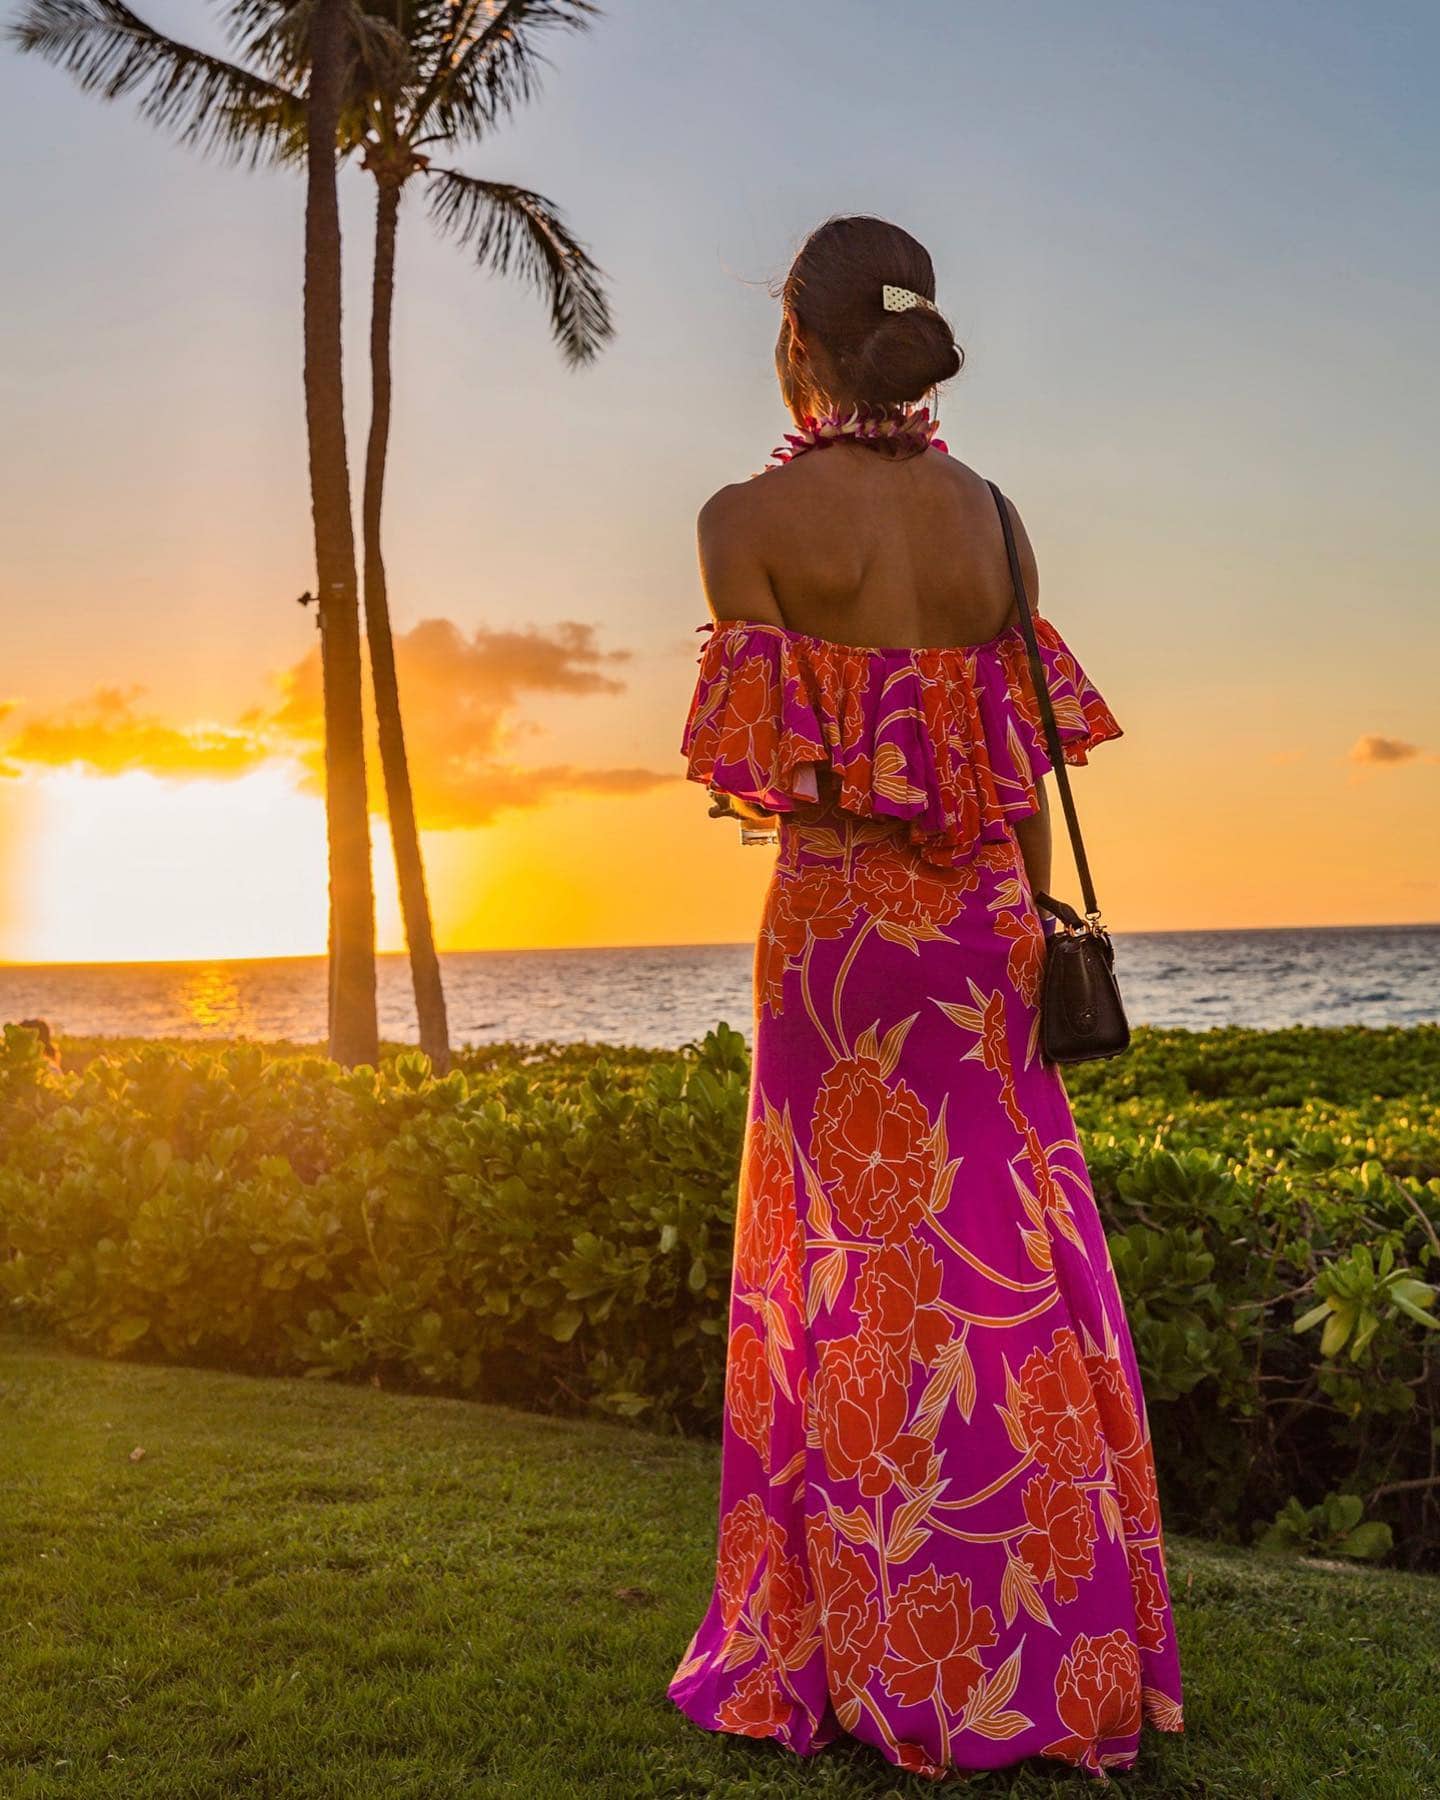 Sunsets, sand, & surf 🌸😍 #Hawaii  #travellust #traveldreams #sunset_pics #hawaiisunset #travelhawaii #hawaiiansunset #beautifulcolors #beautifulplace #outfitdetails #goldensunset #hawaiianstyle #travelphotography #travelmoments #colorfulsky #traveloutfit #travelgram